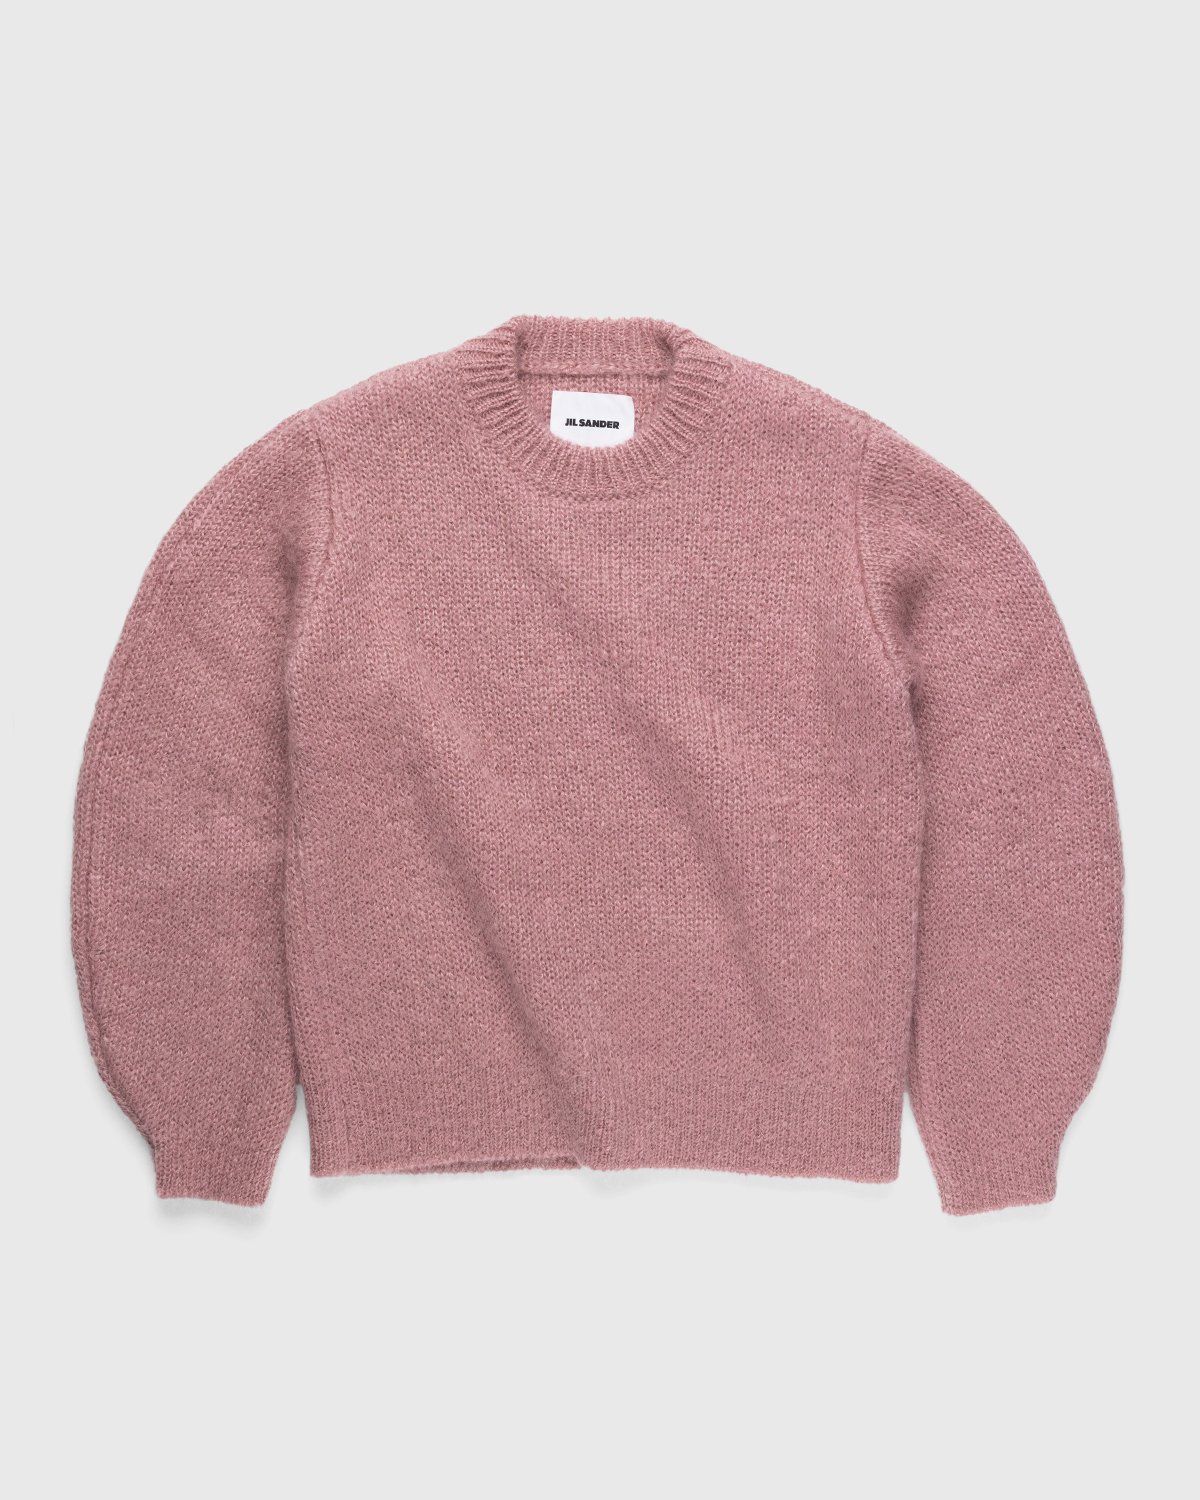 Jil Sander – Knitted Sweater Pink | Highsnobiety Shop